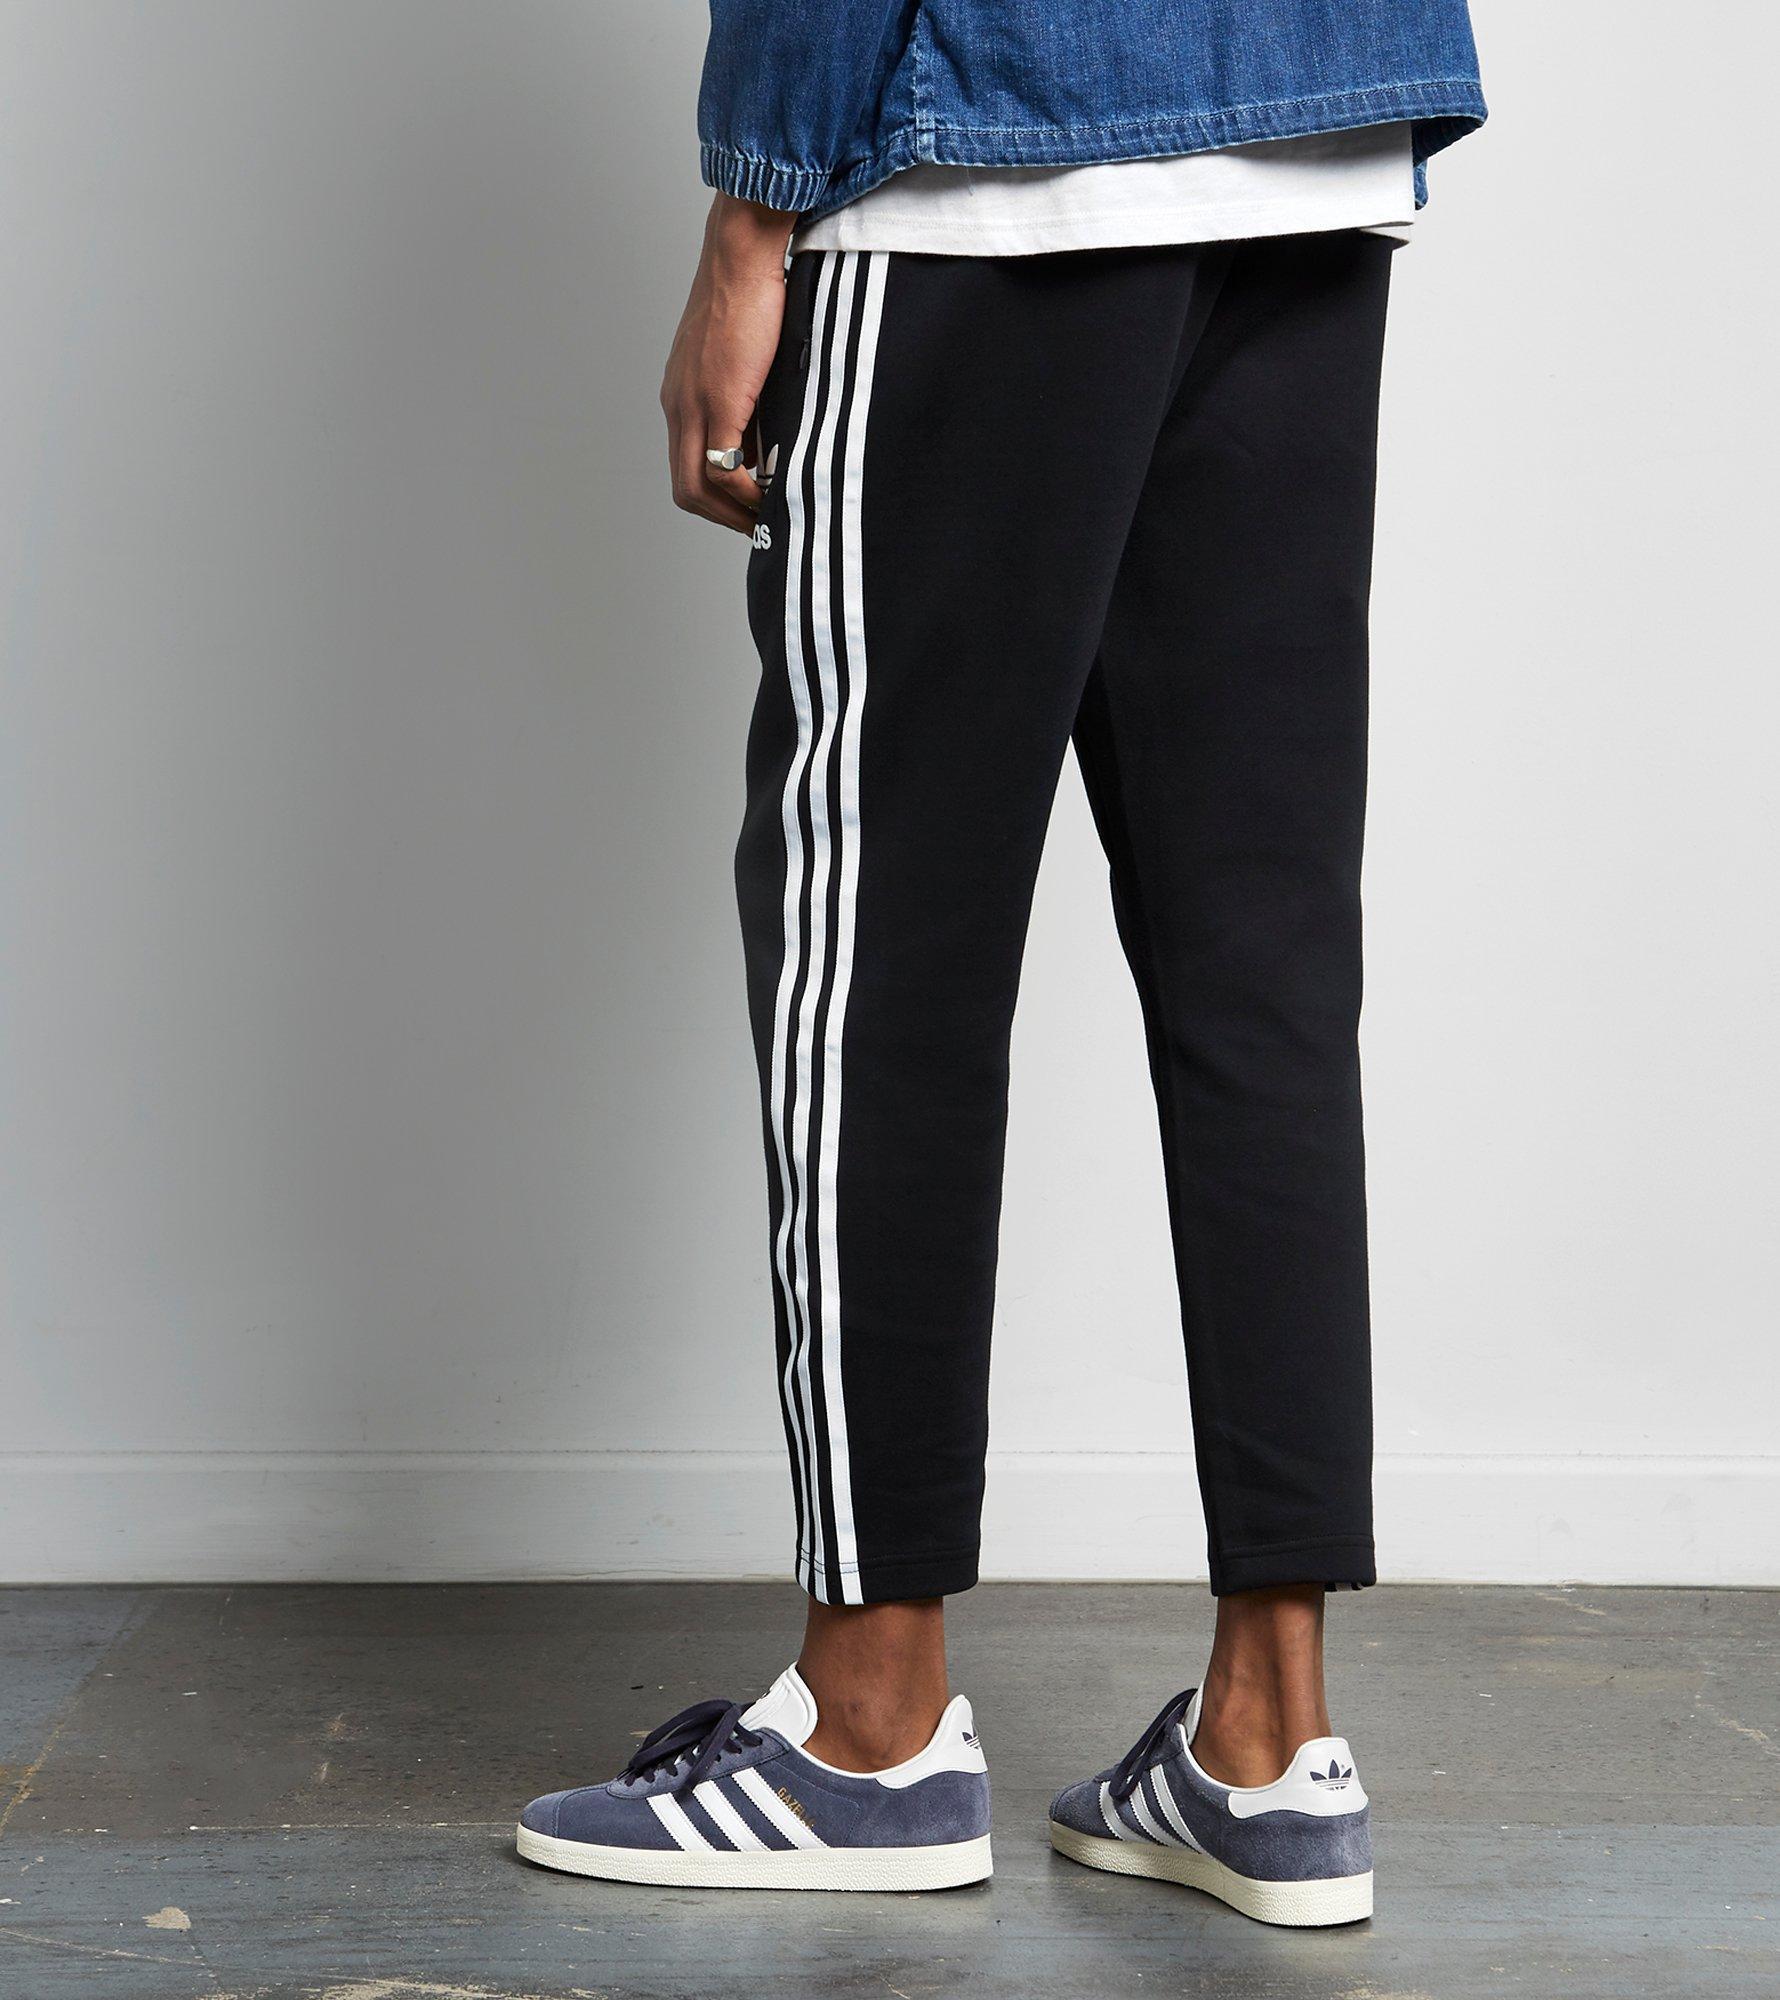 Lyst - Adidas Originals Adicolor Skinny Track Pants in Black for Men